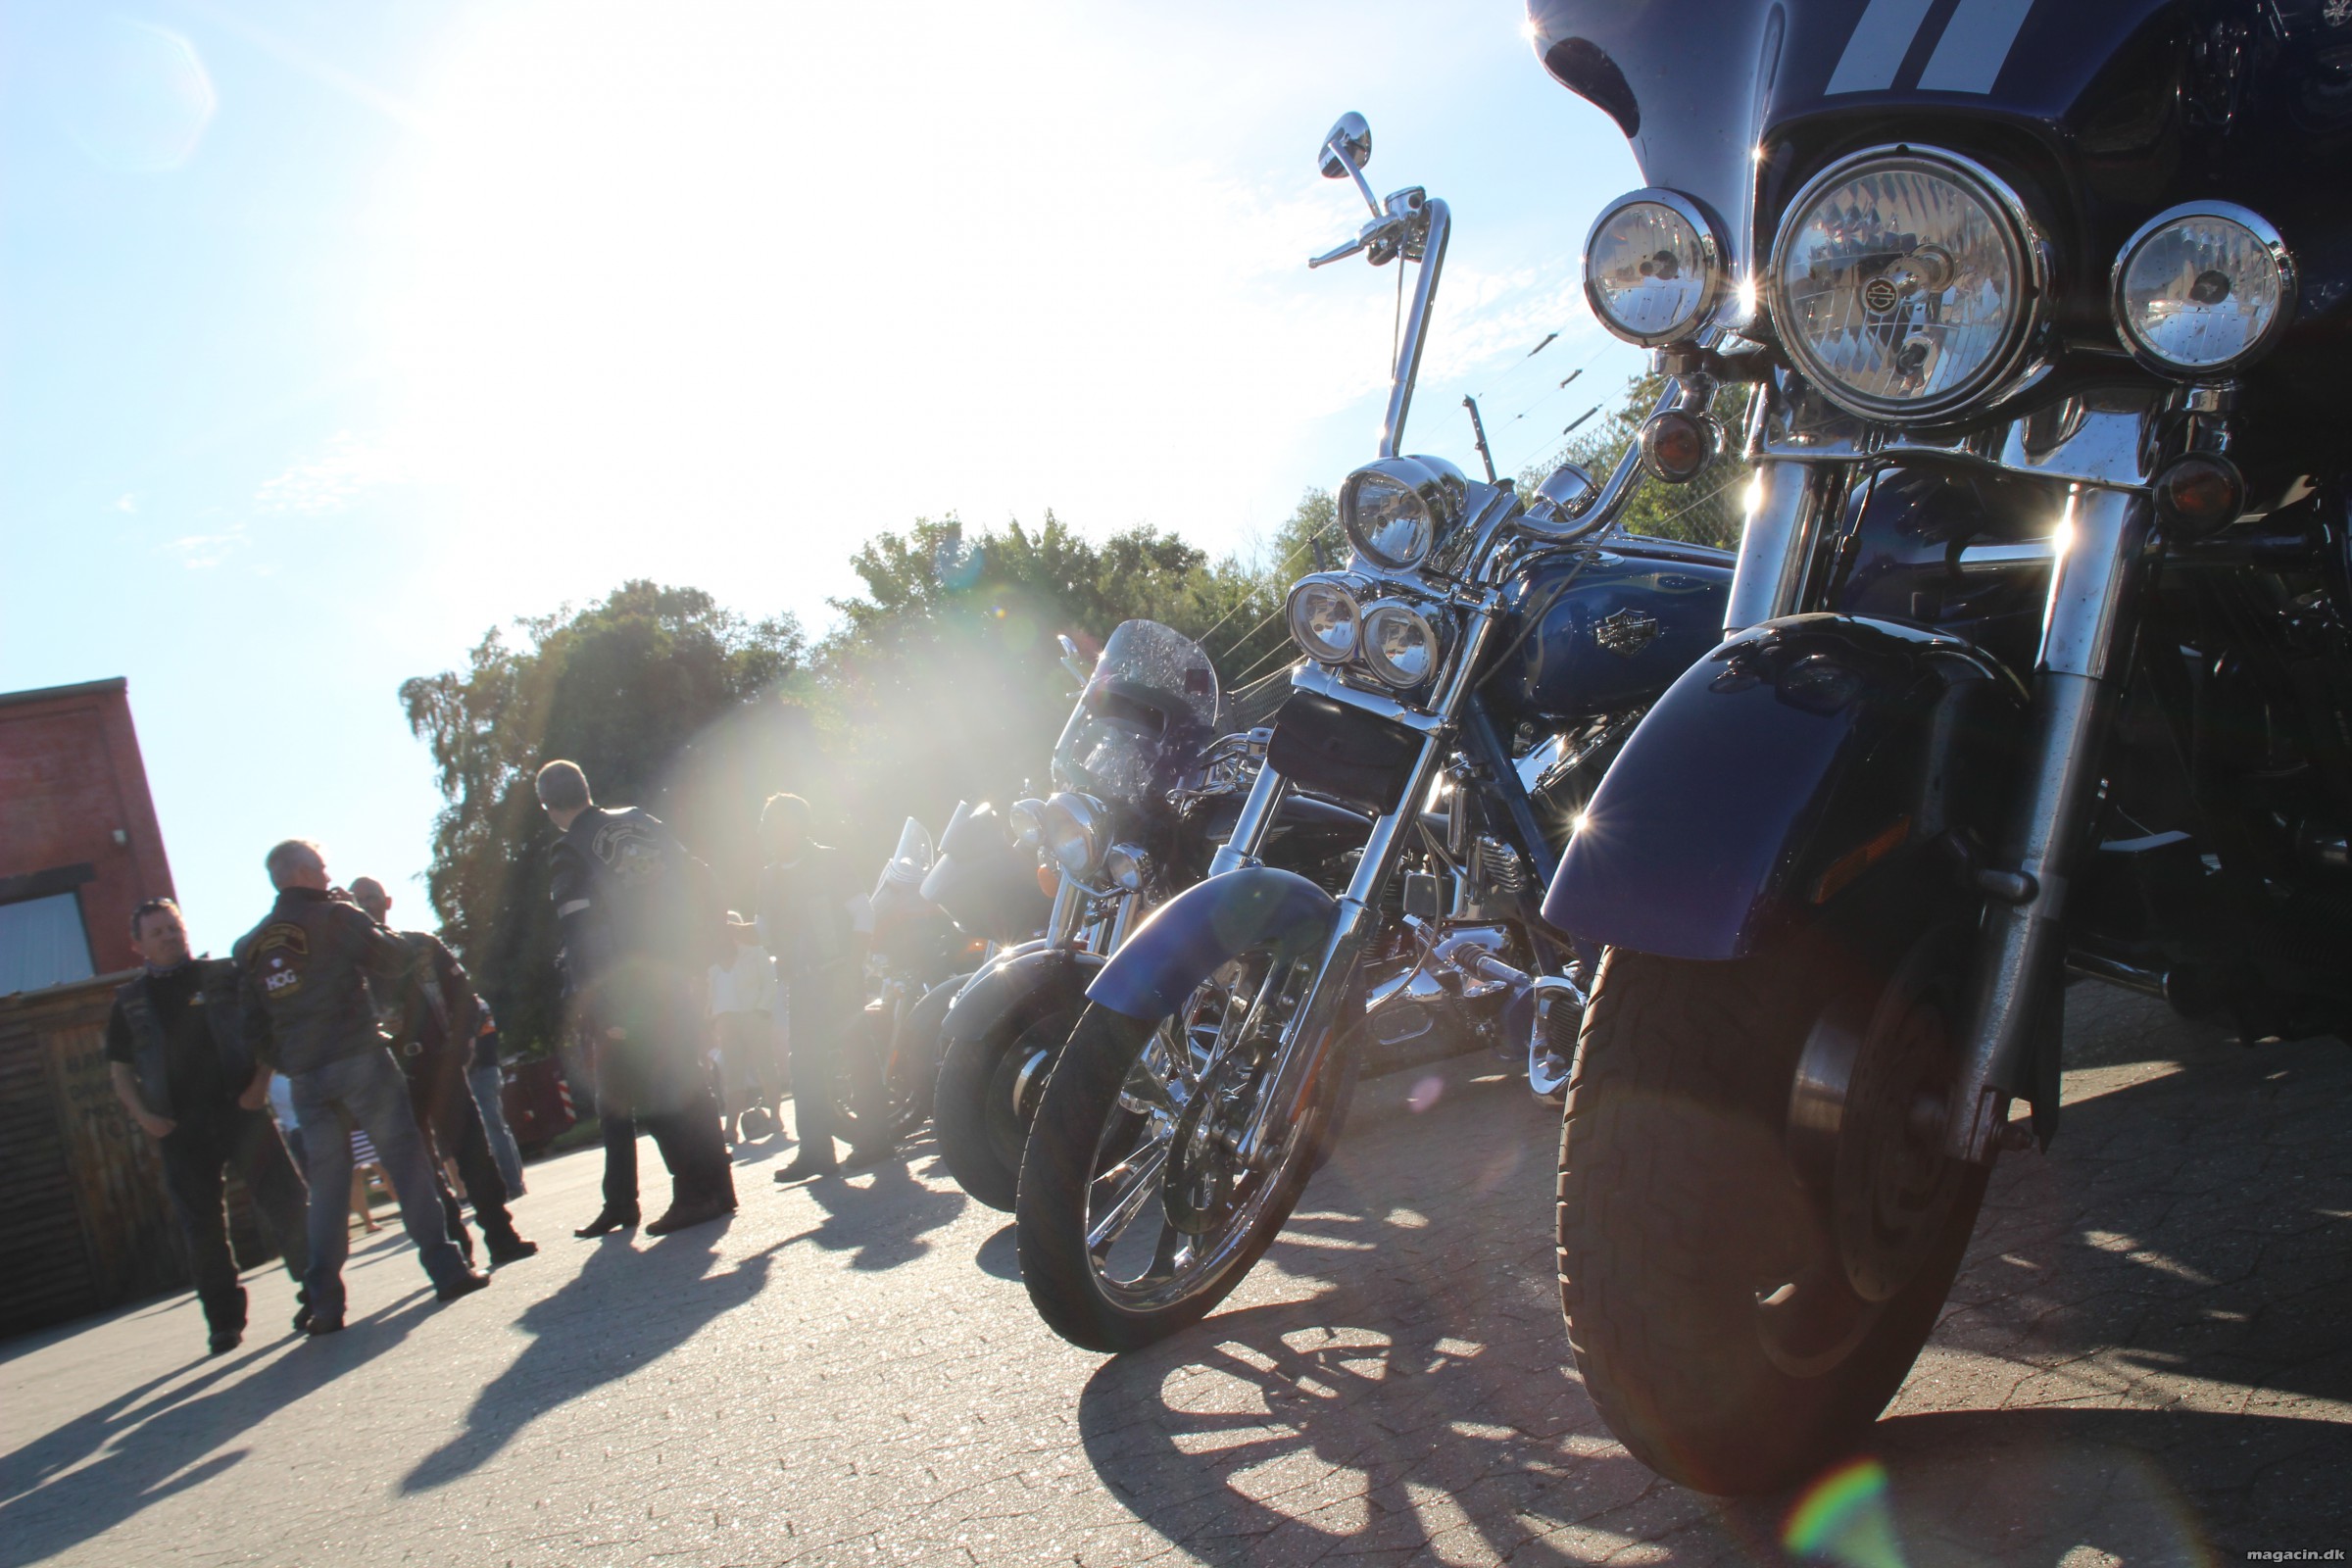 Event: Harley Davidson Discover More 2015